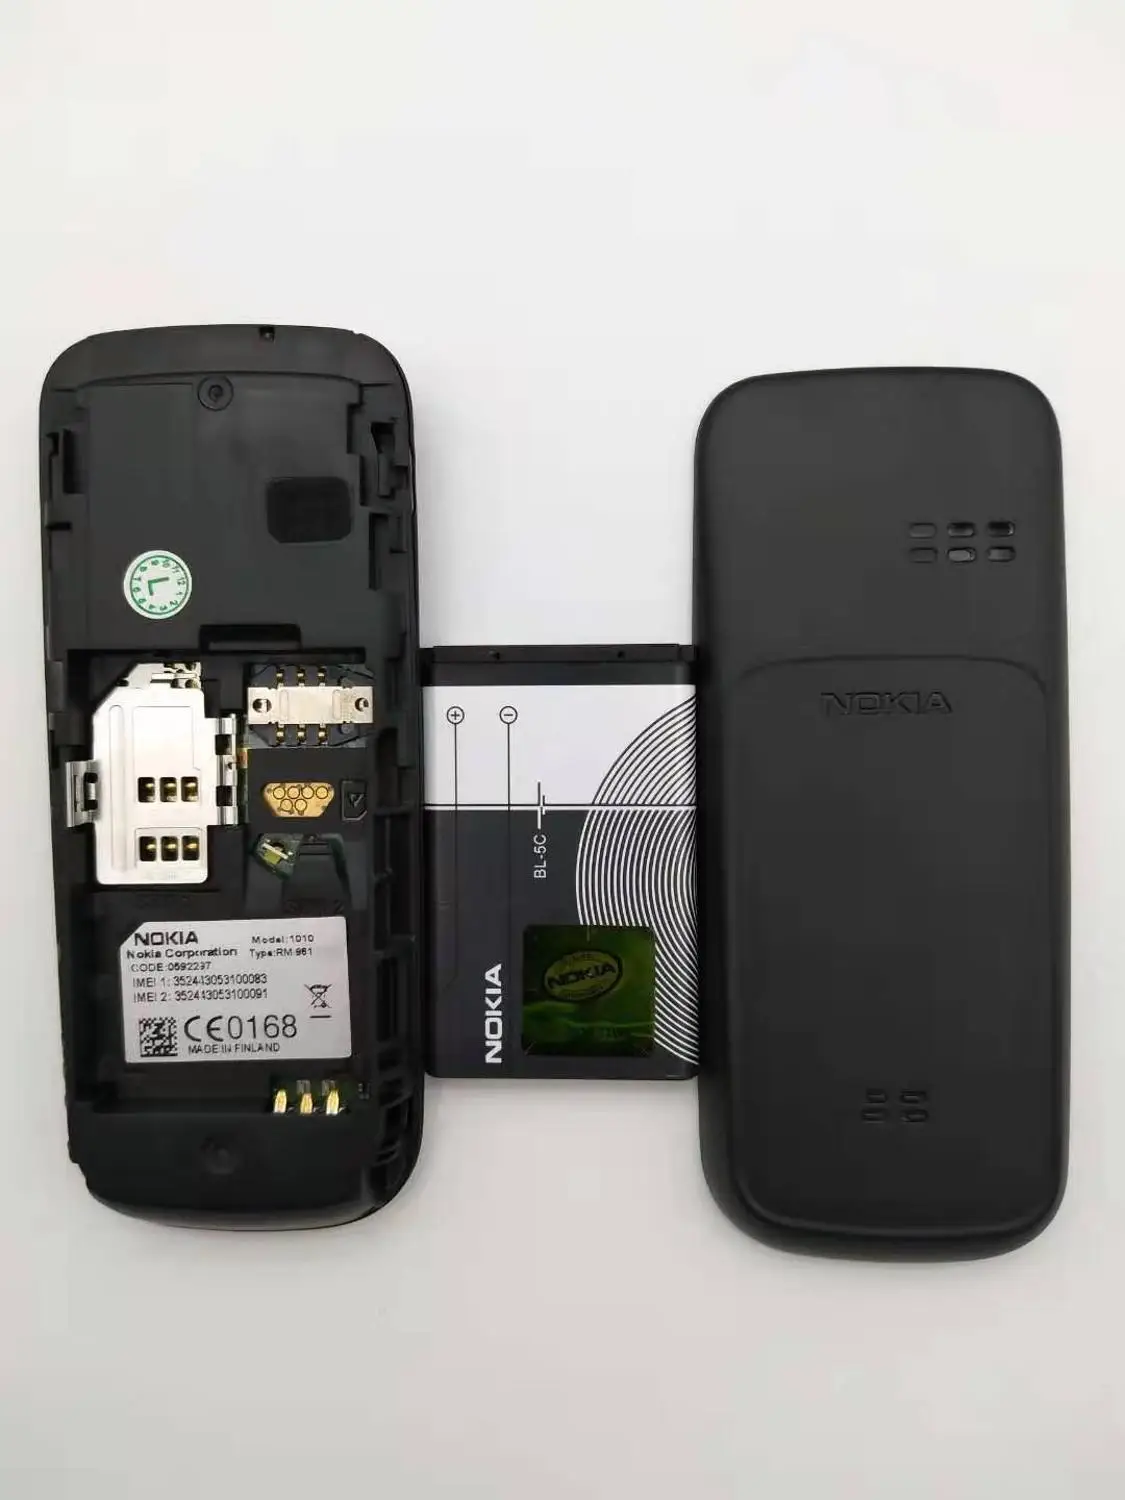 nokia 1010 refurbished original unlocked nokia 1010 dual sim card mobile phone one year warranty refurbished free global shipping